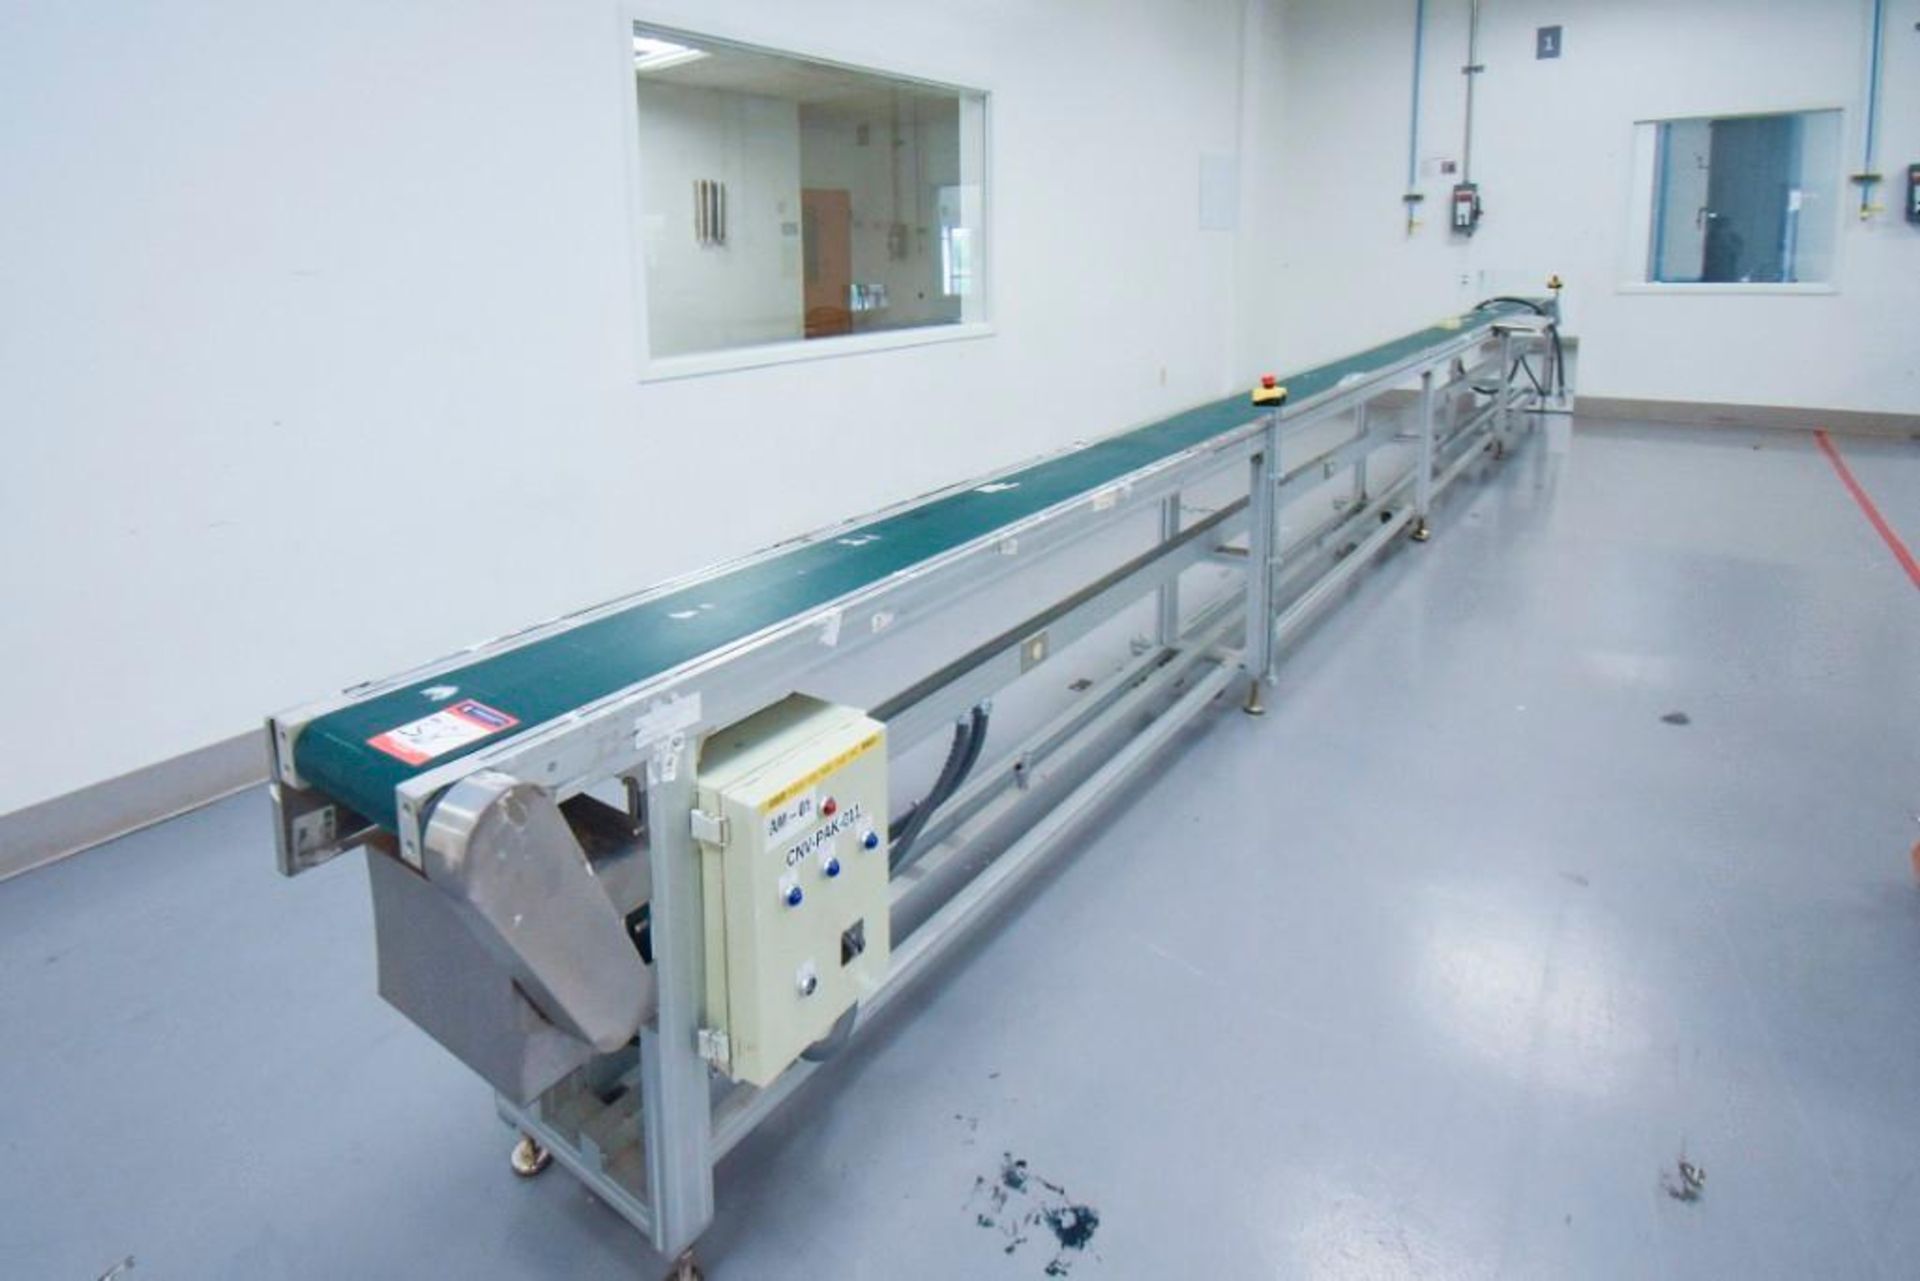 Horizontal Conveyor with Quality Control Table (CNV-PAK-011) - Image 2 of 4